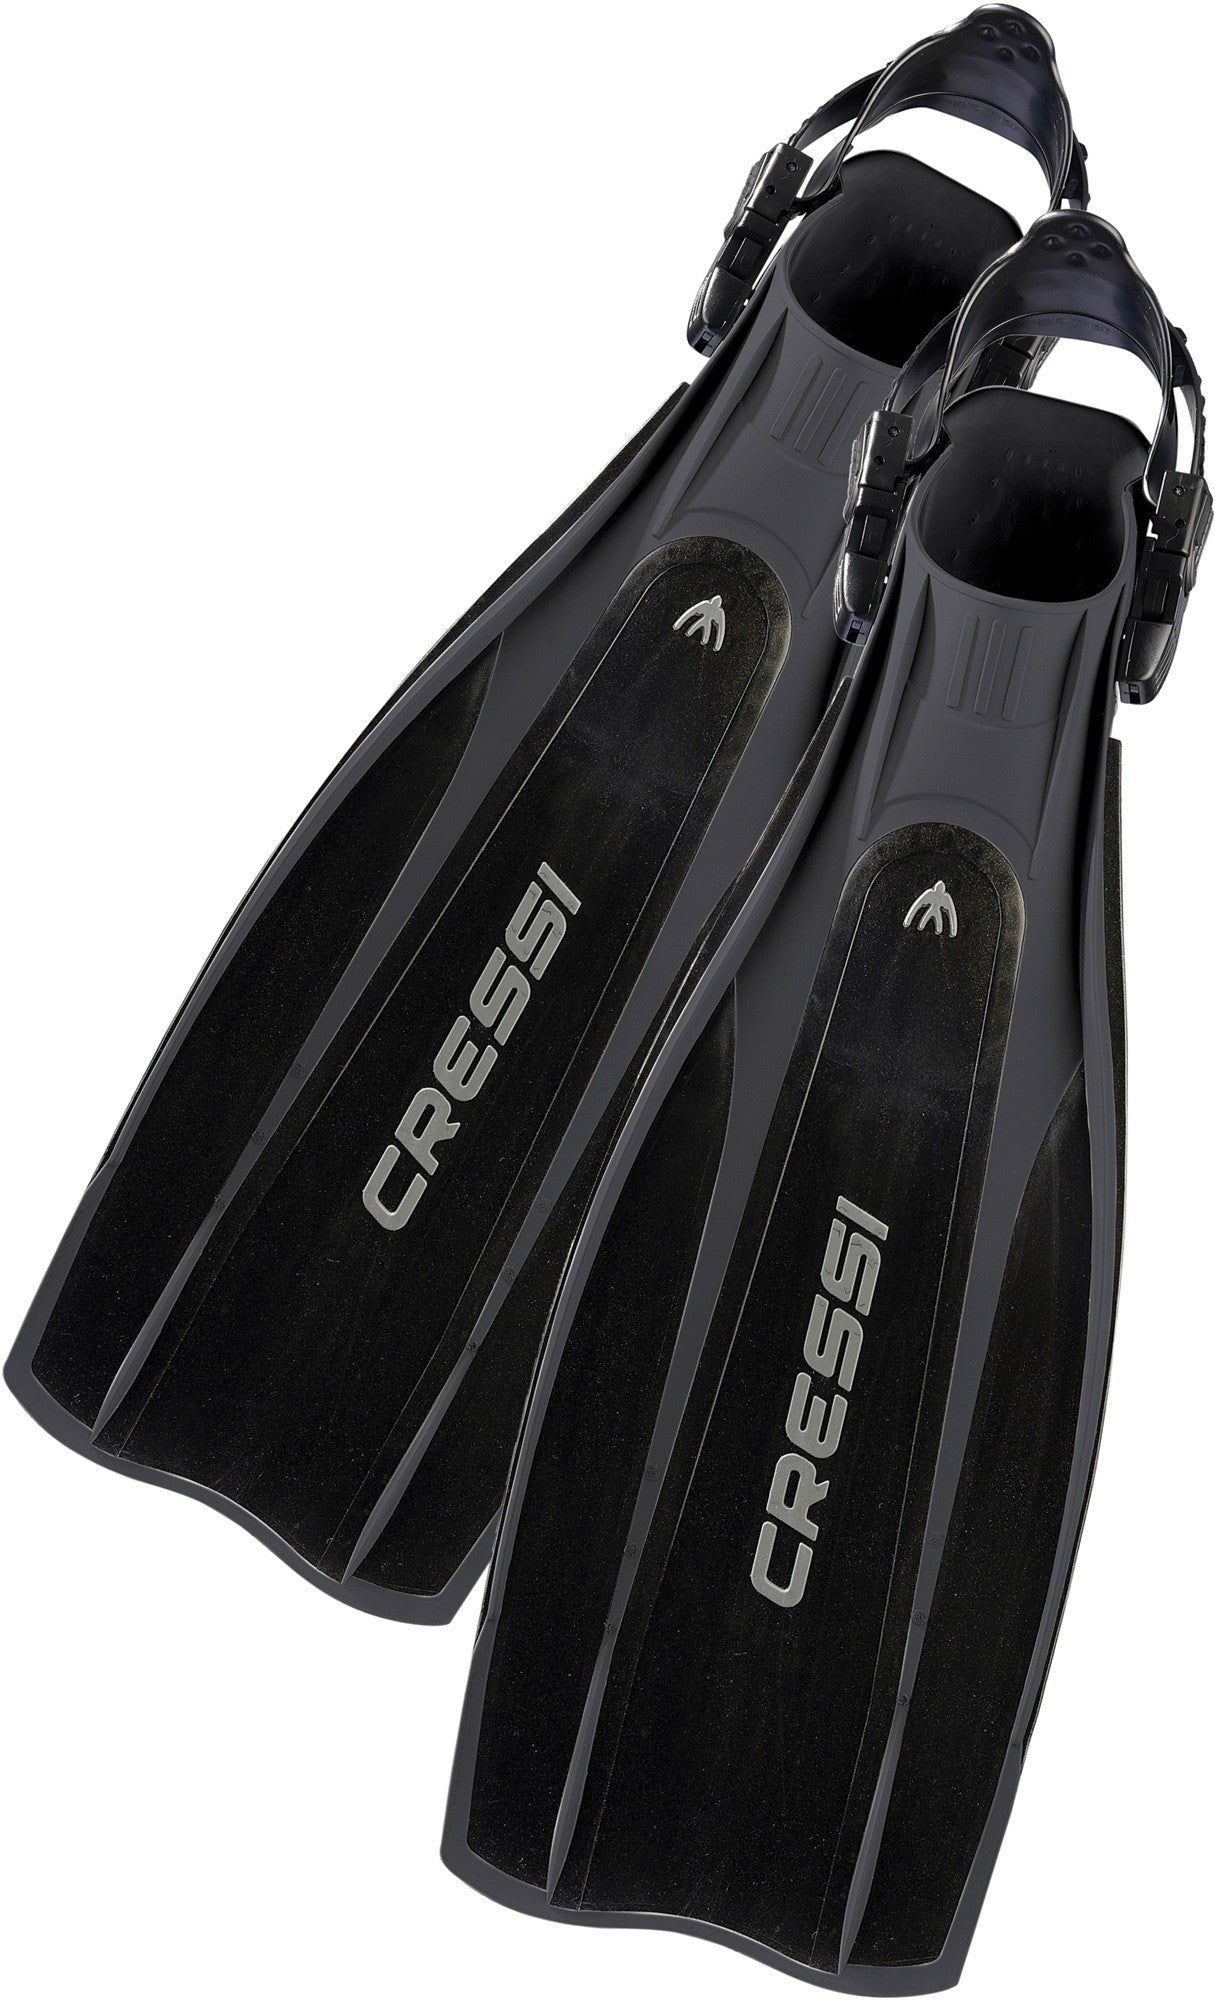 Cressi Reaction EBS Cressi Professional Scuba Diving Equipment